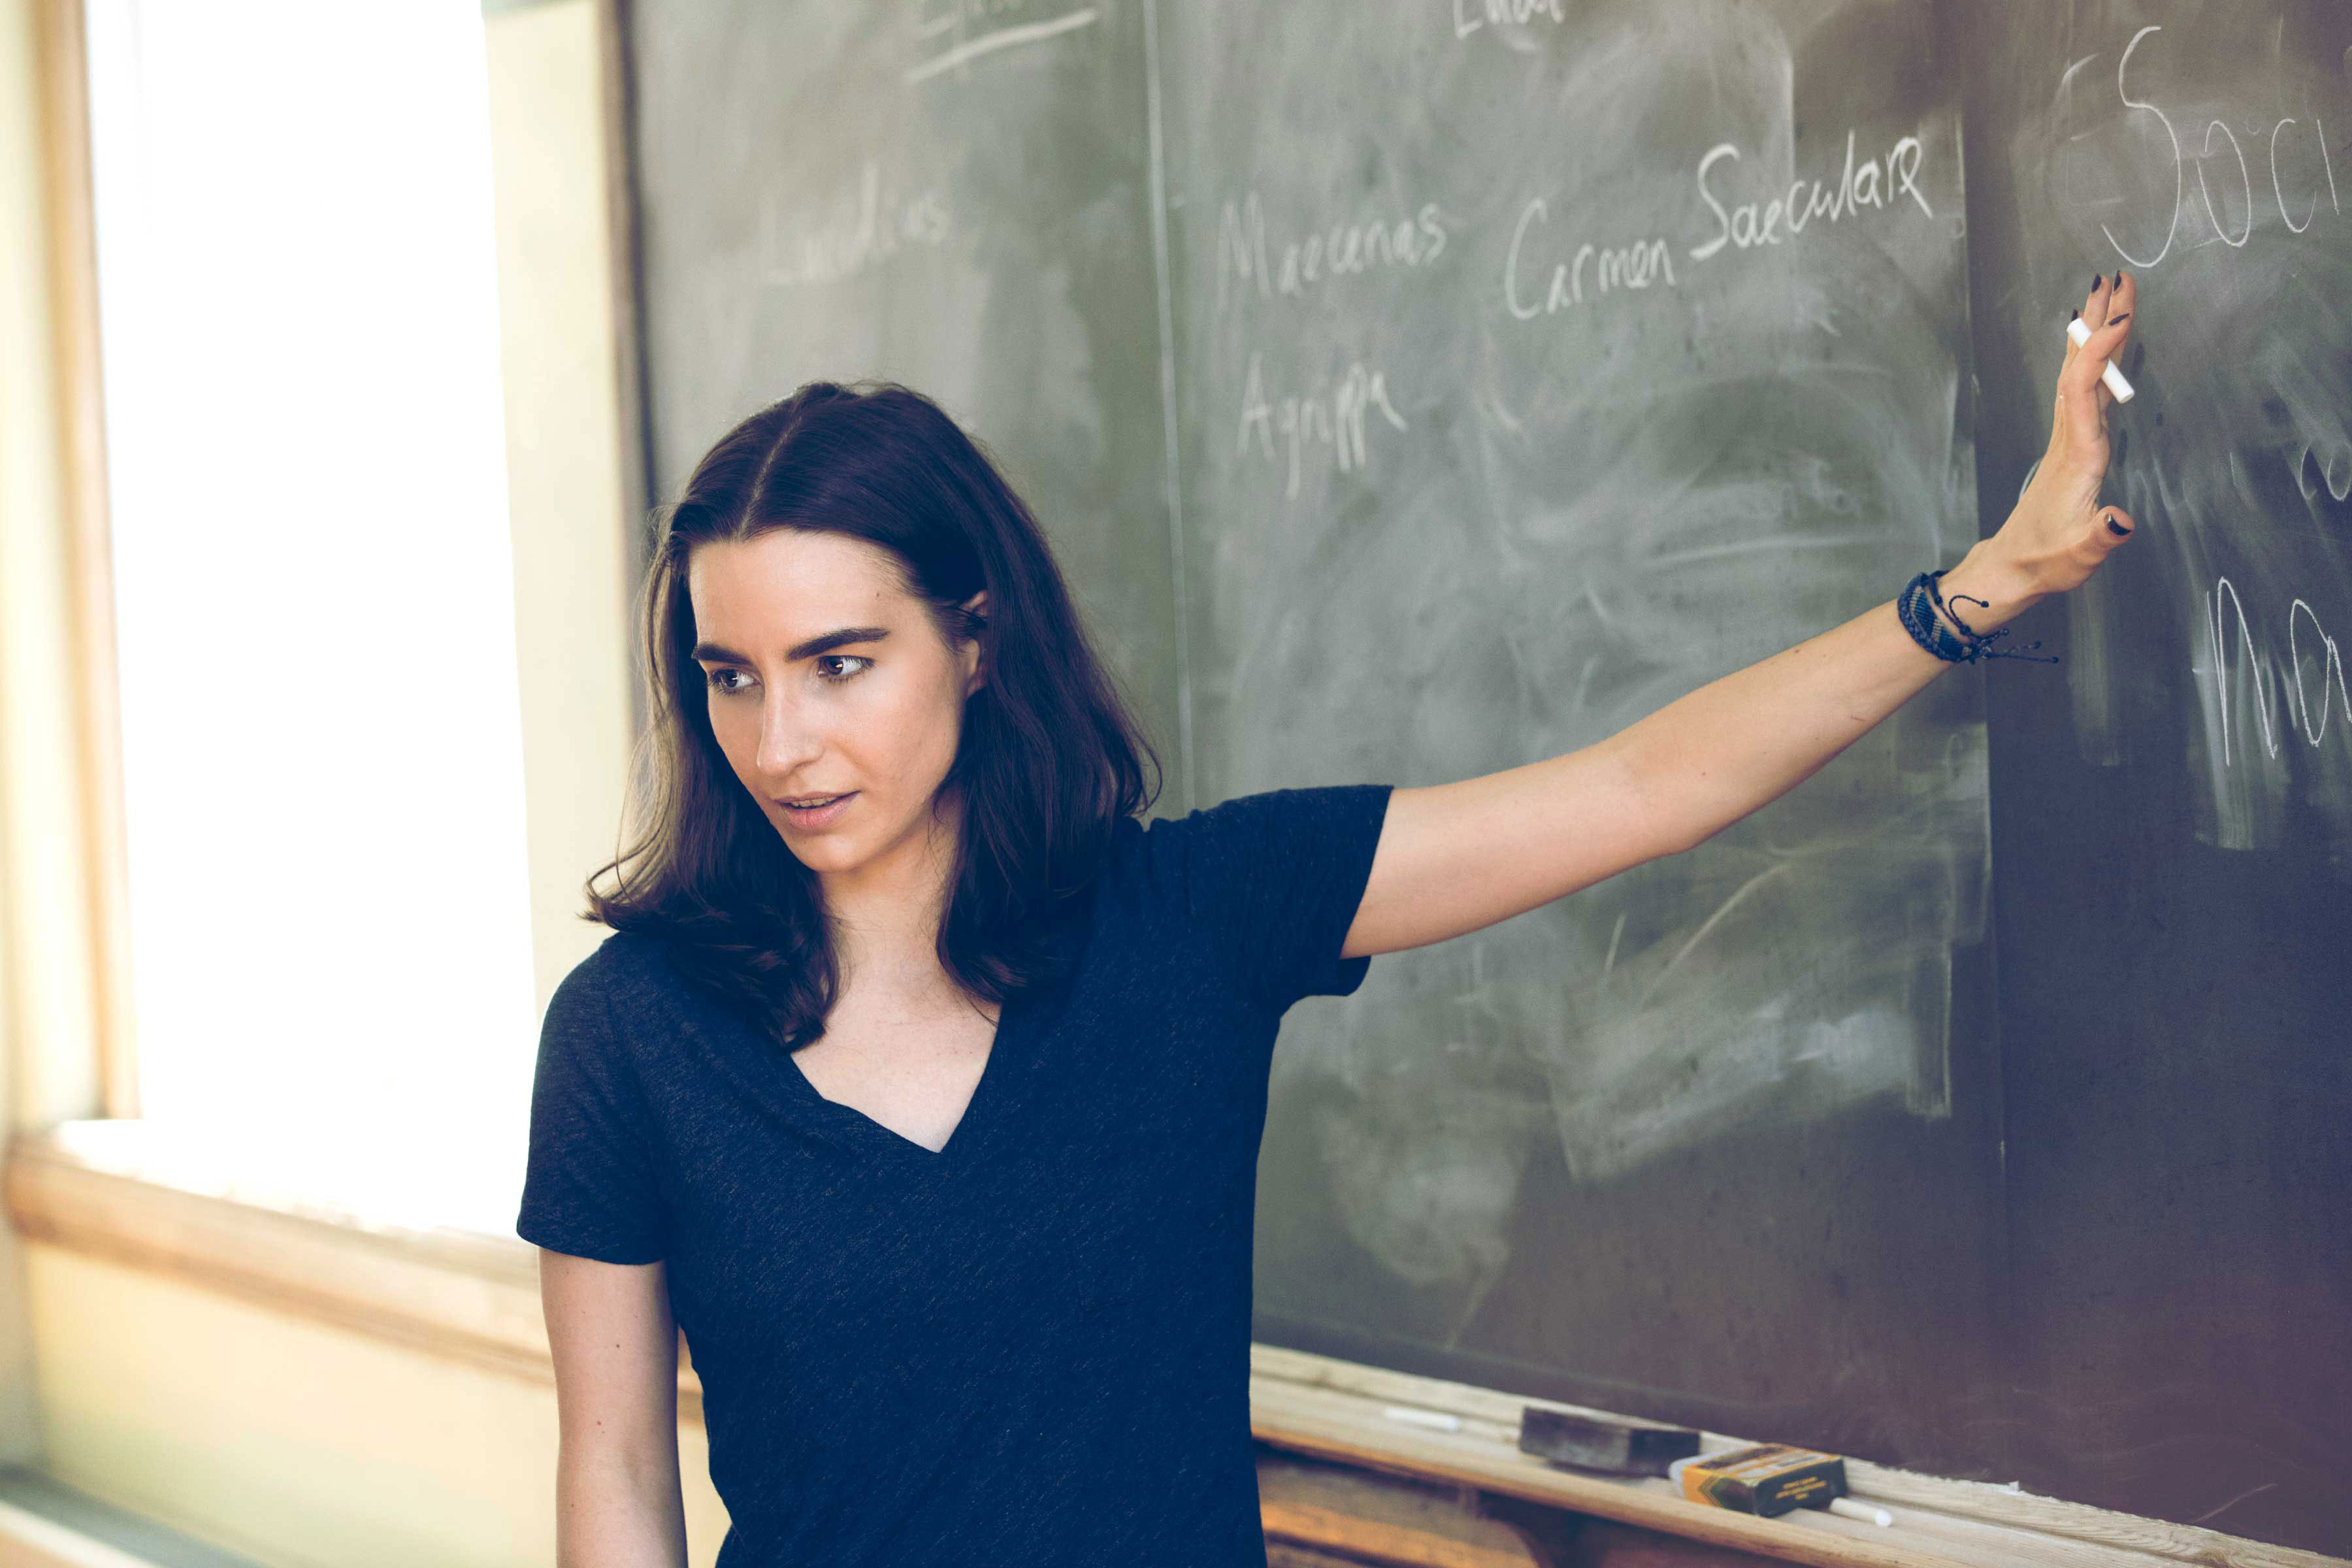 Elizabeth Barnes pointing to something on a chalkboard